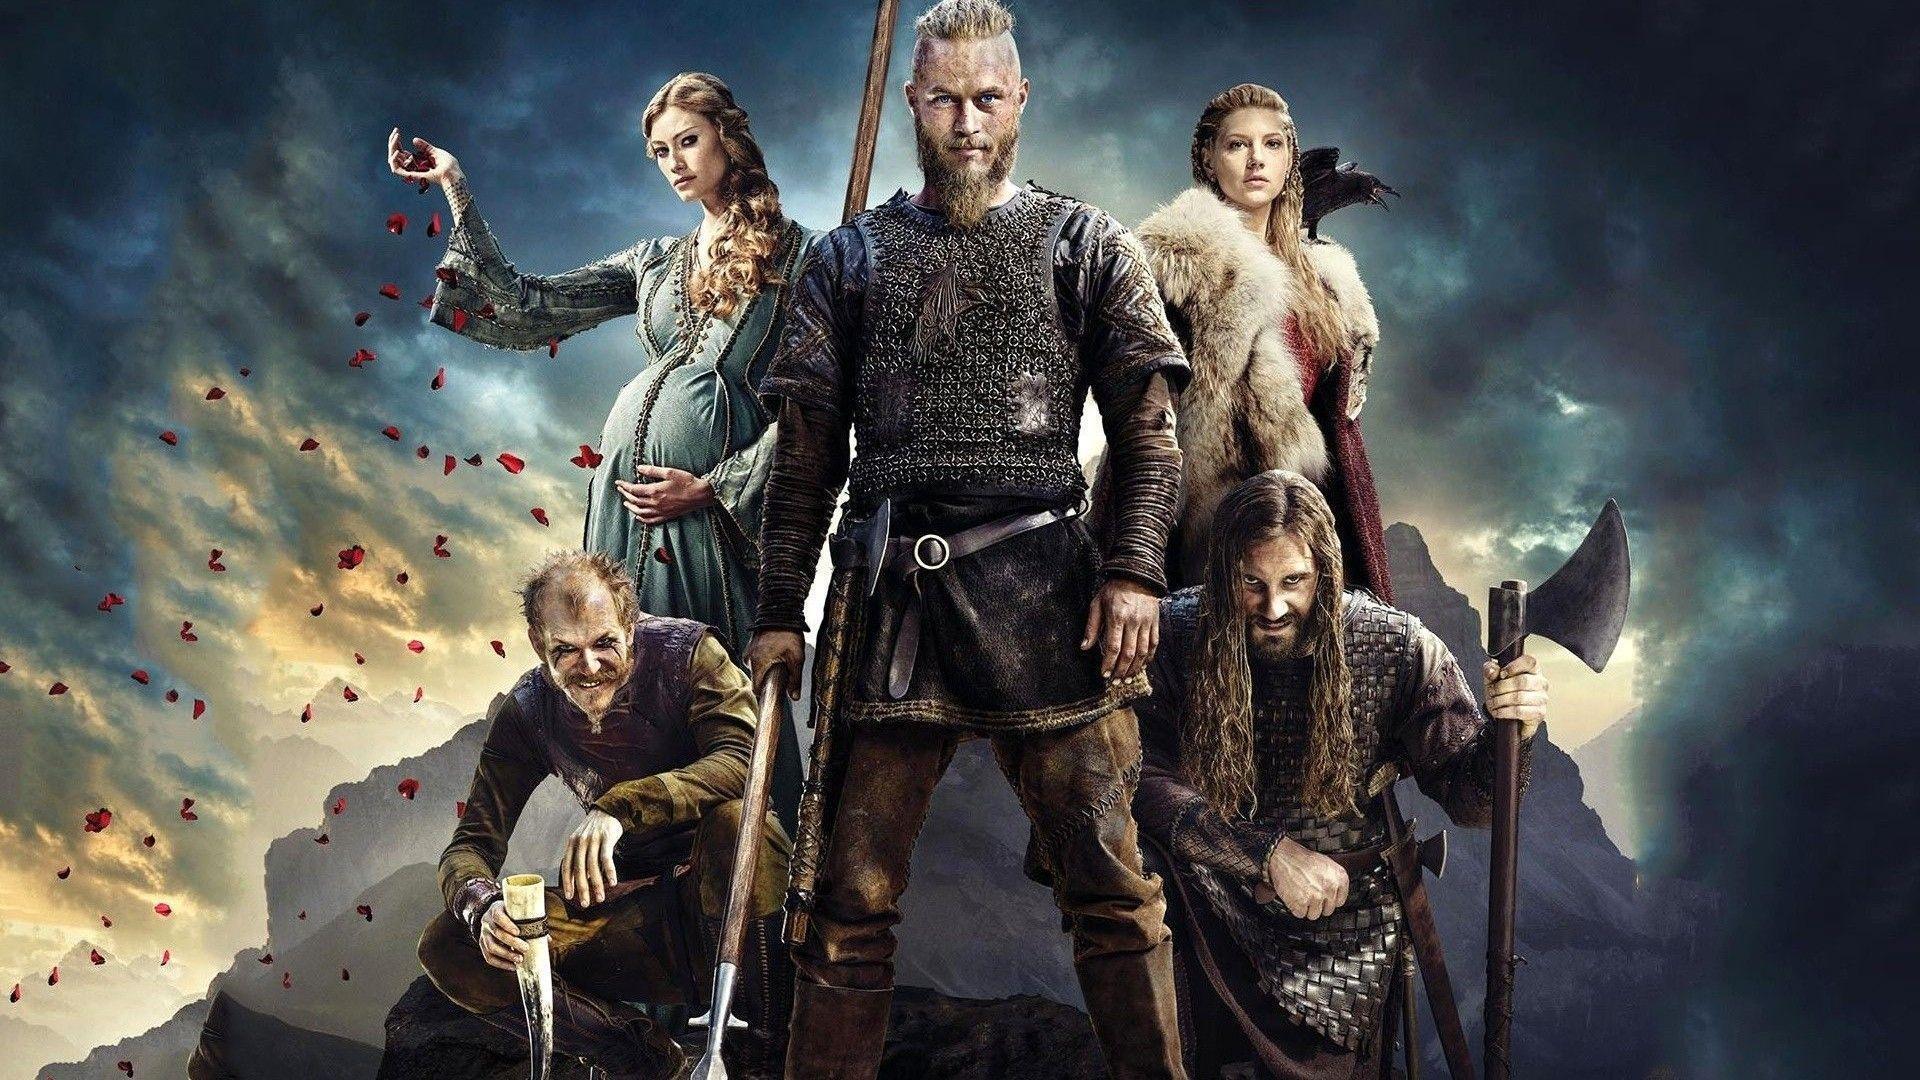 Vikings TV Show Wallpaper HD Download For PC & Laptop